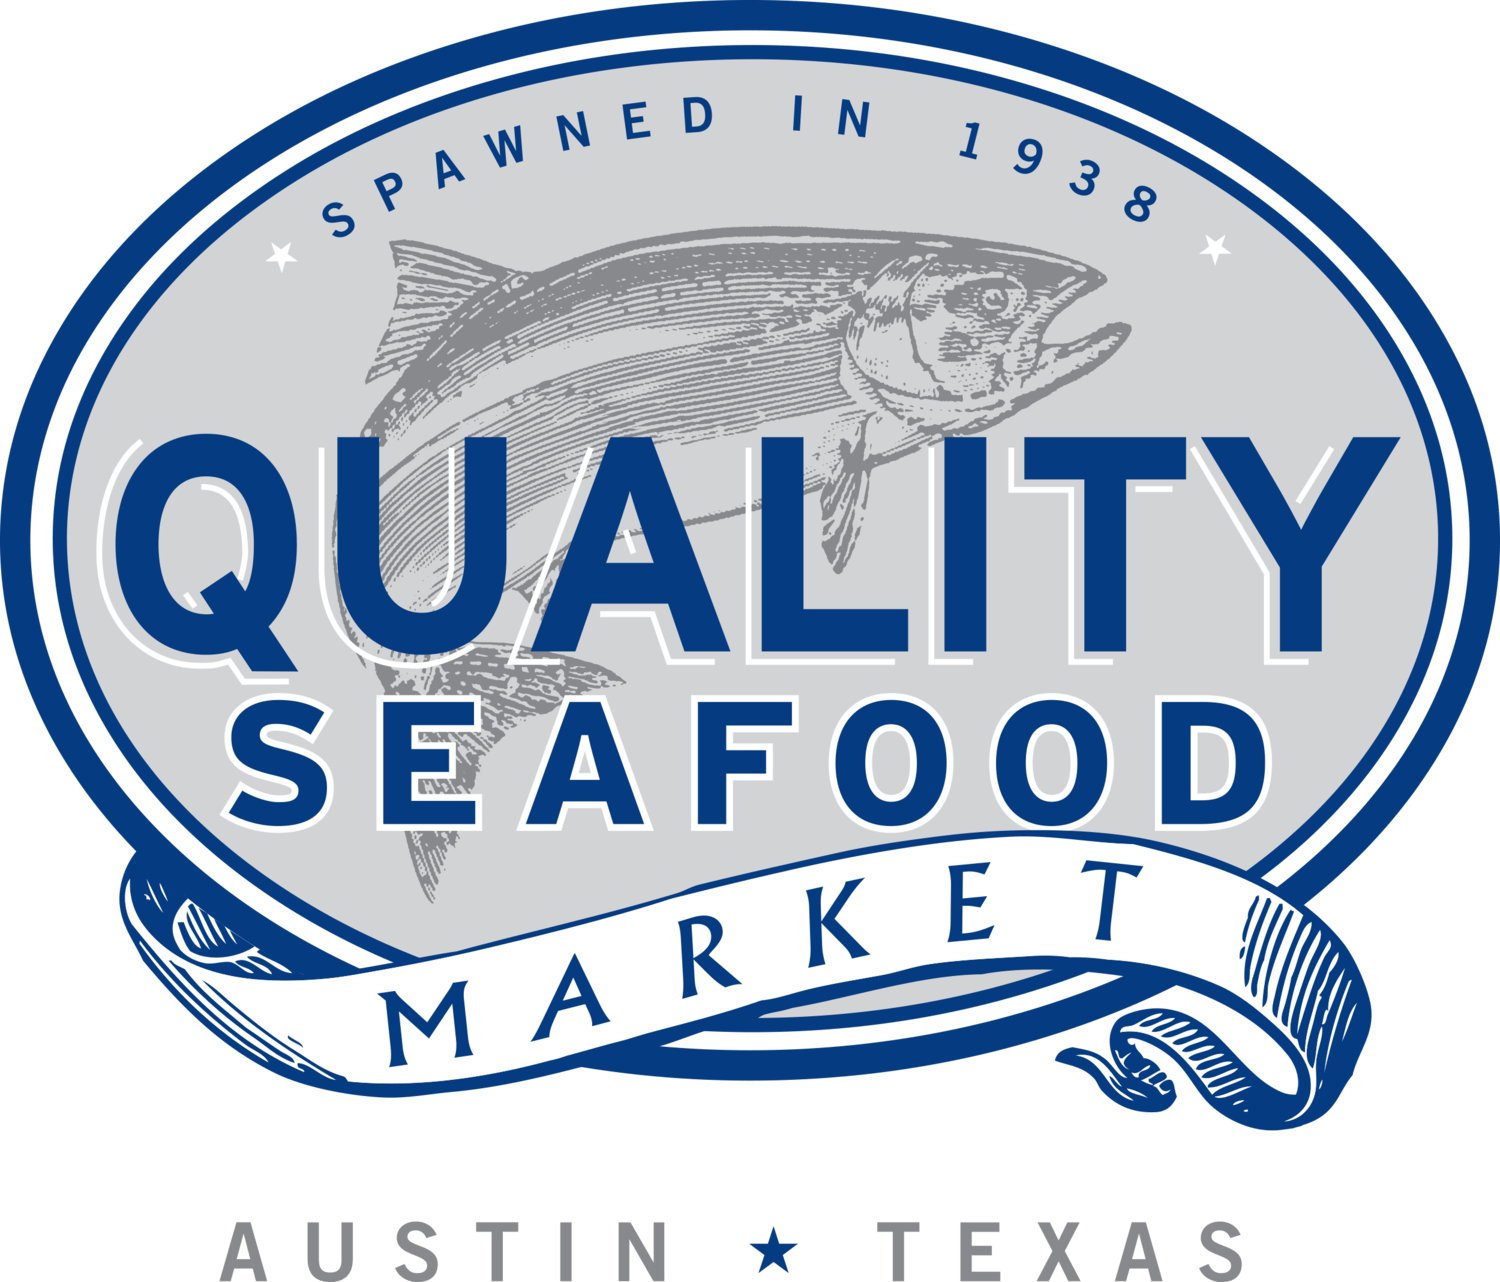 Seafood Market Logo - The Market — Quality Seafood Market